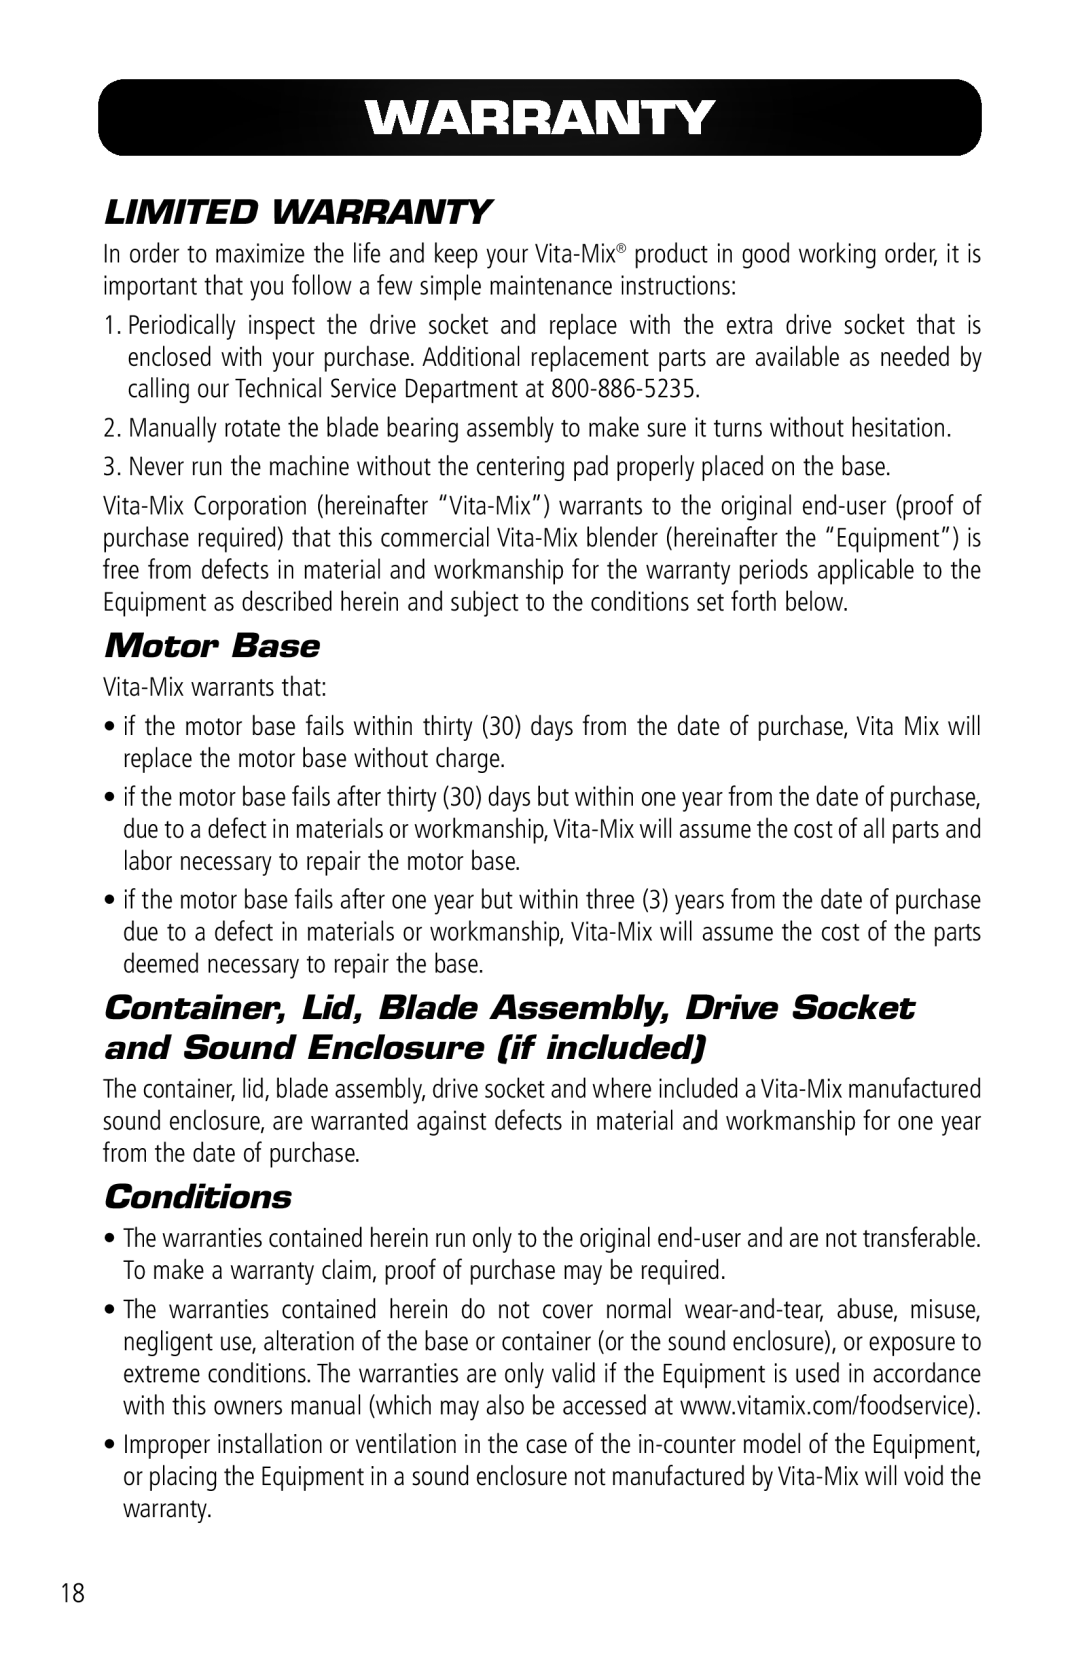 Vita-Mix VM0141 manual Limited Warranty, Motor Base, Conditions 